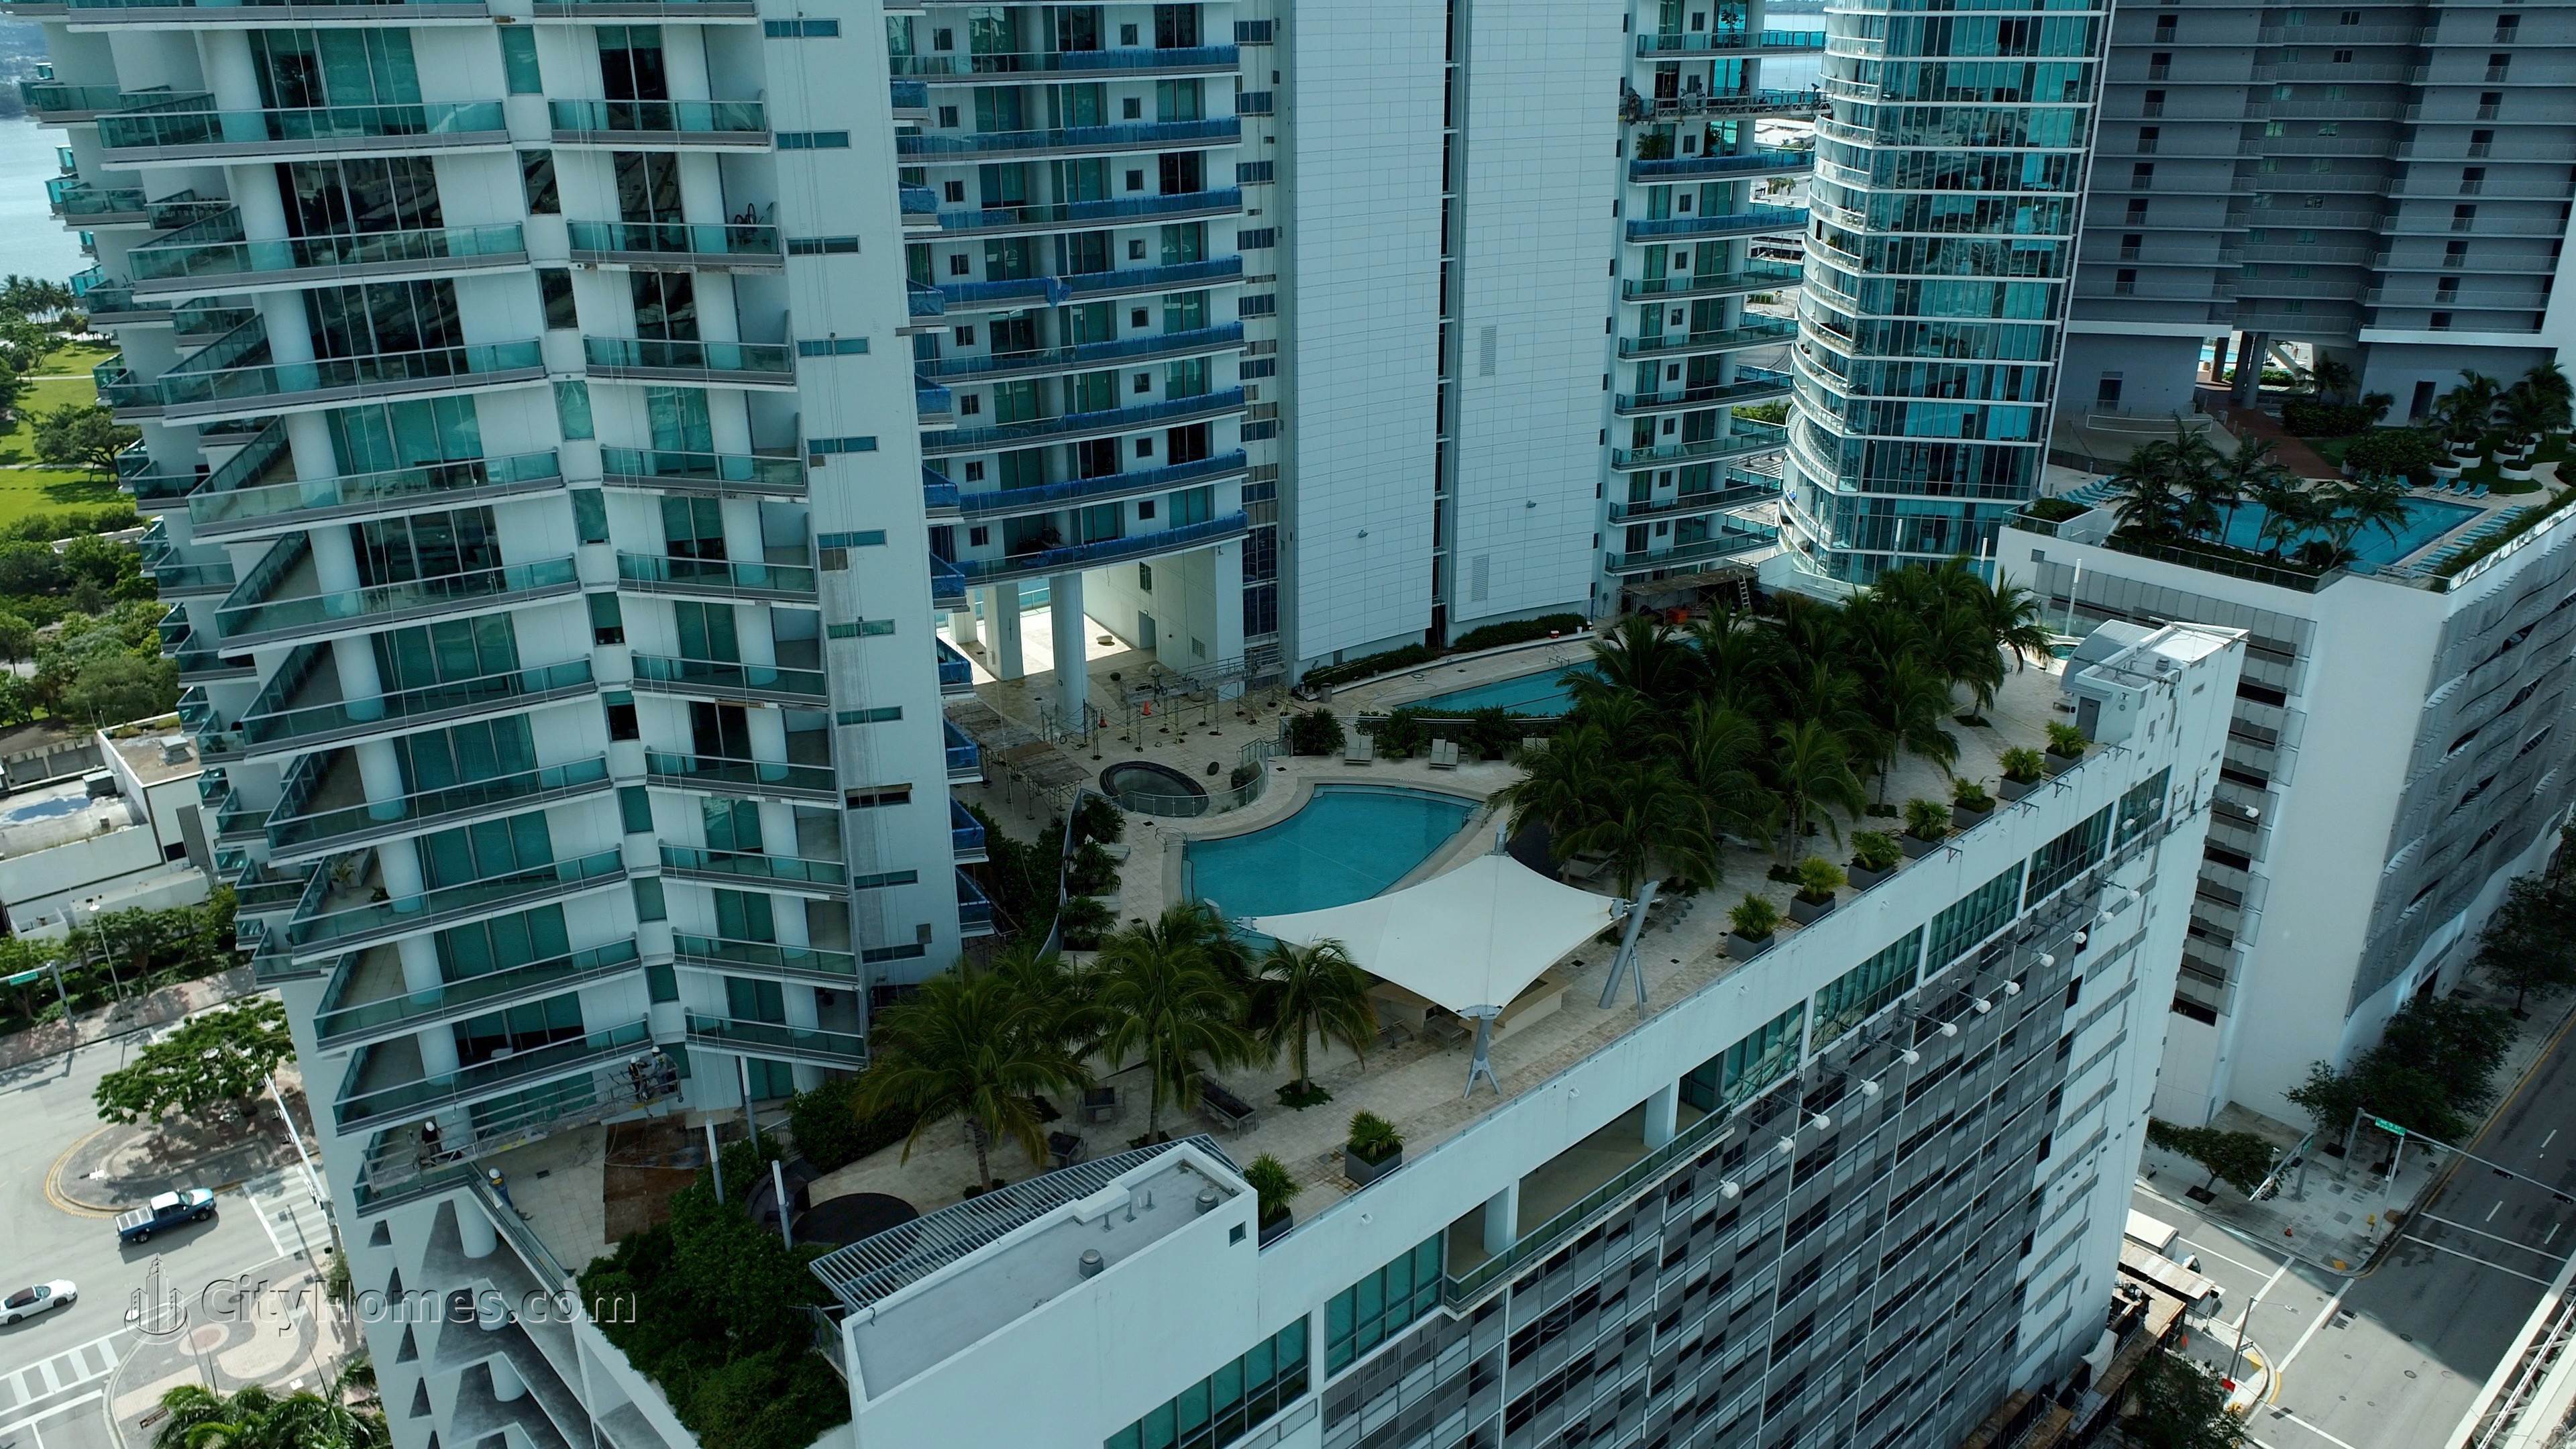 5. 900 Biscayne Boulevard, Miami, FL 33132에 900 Biscayne Bay 건물